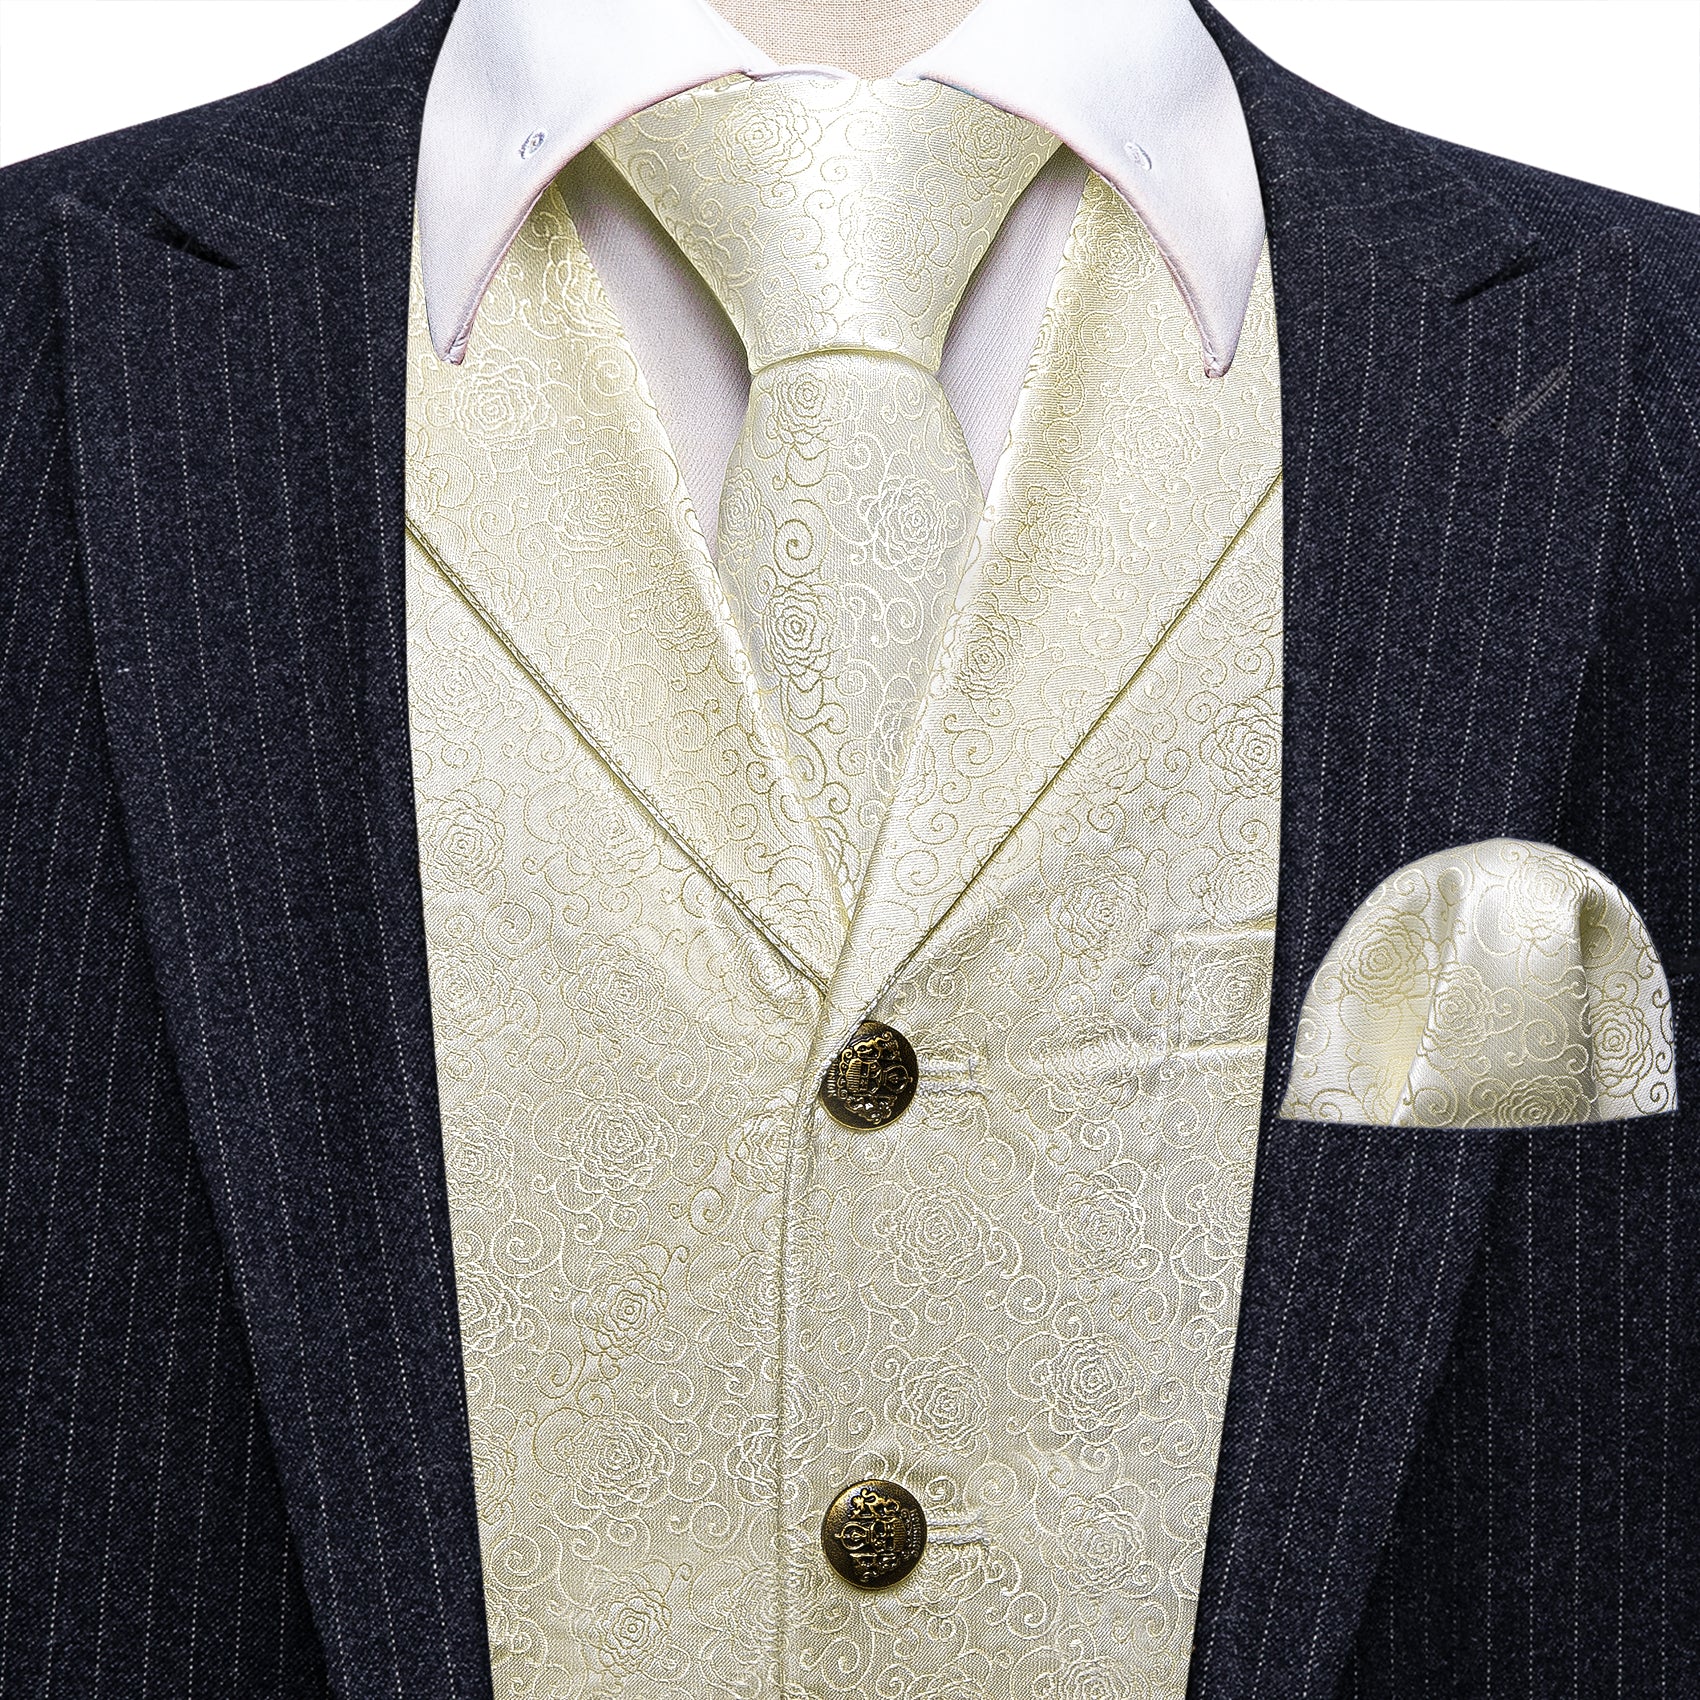 Creamy-White Solid Silk V Neck Vest Tie Pocket Square Cufflinks Set